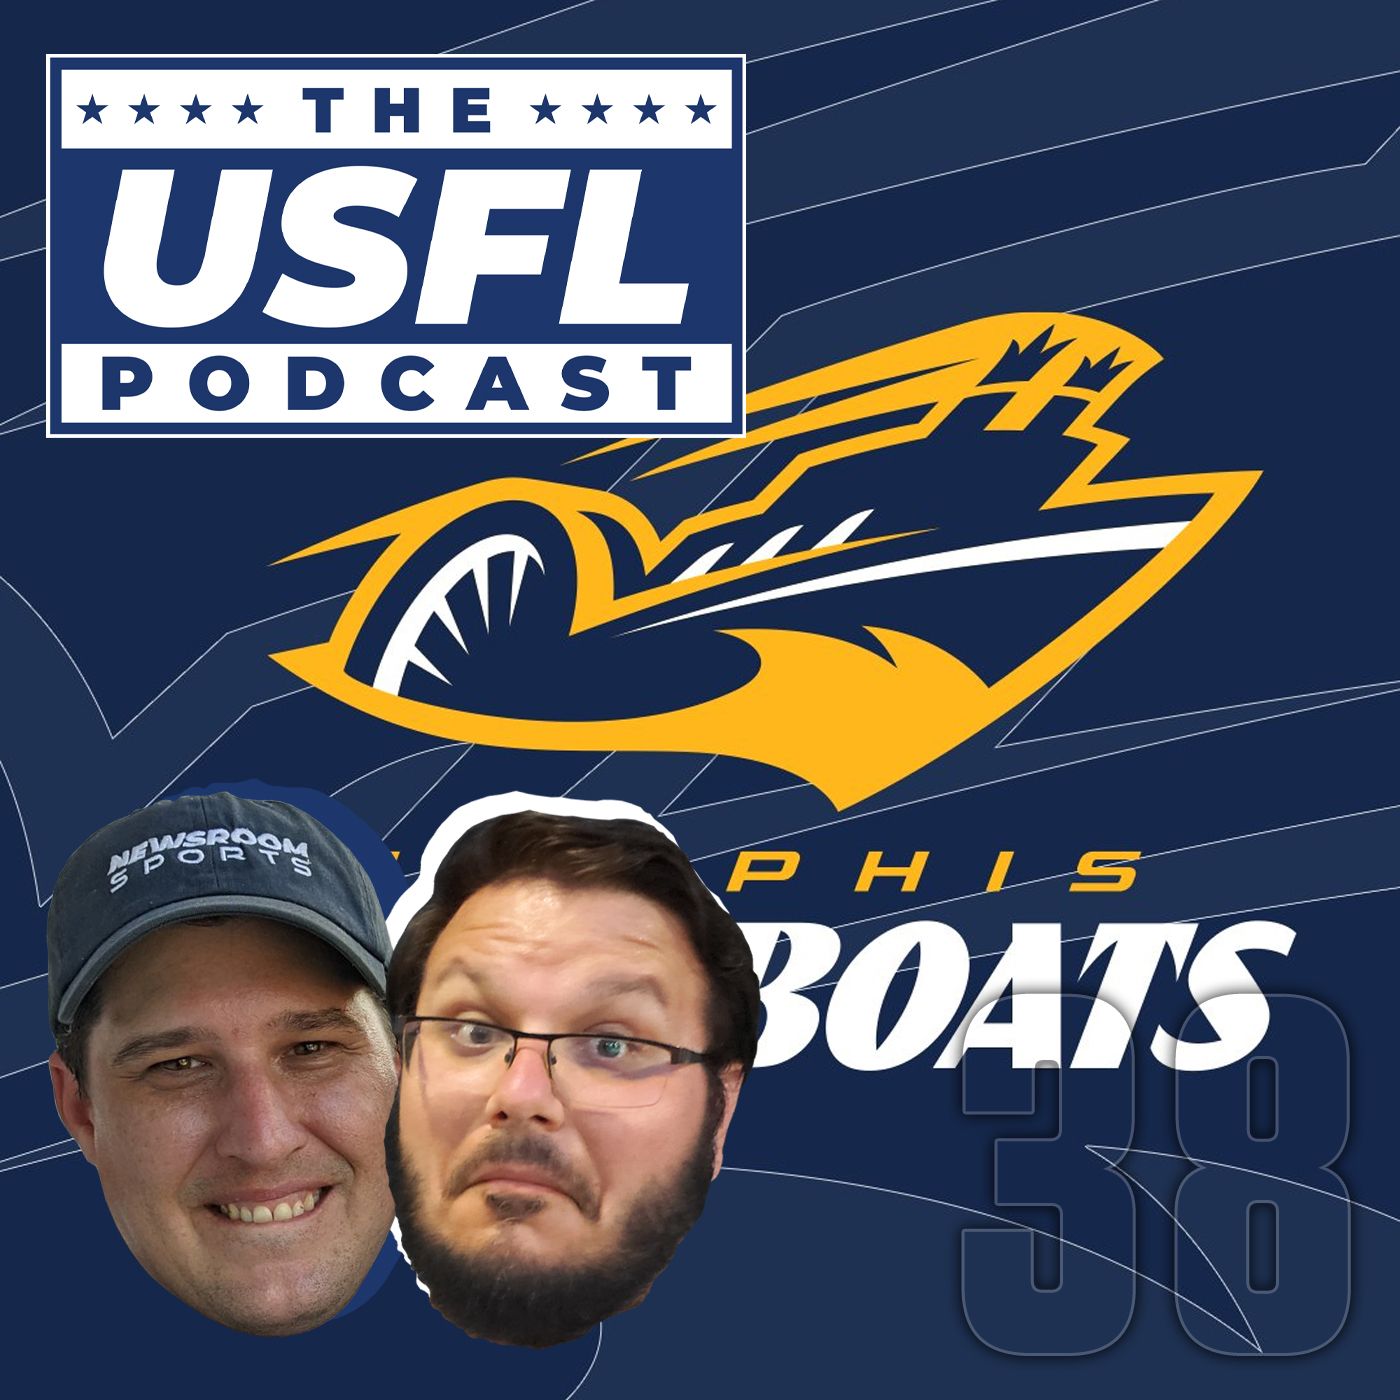 Return of the Showboats, Hub News & more… USFL Podcast #38